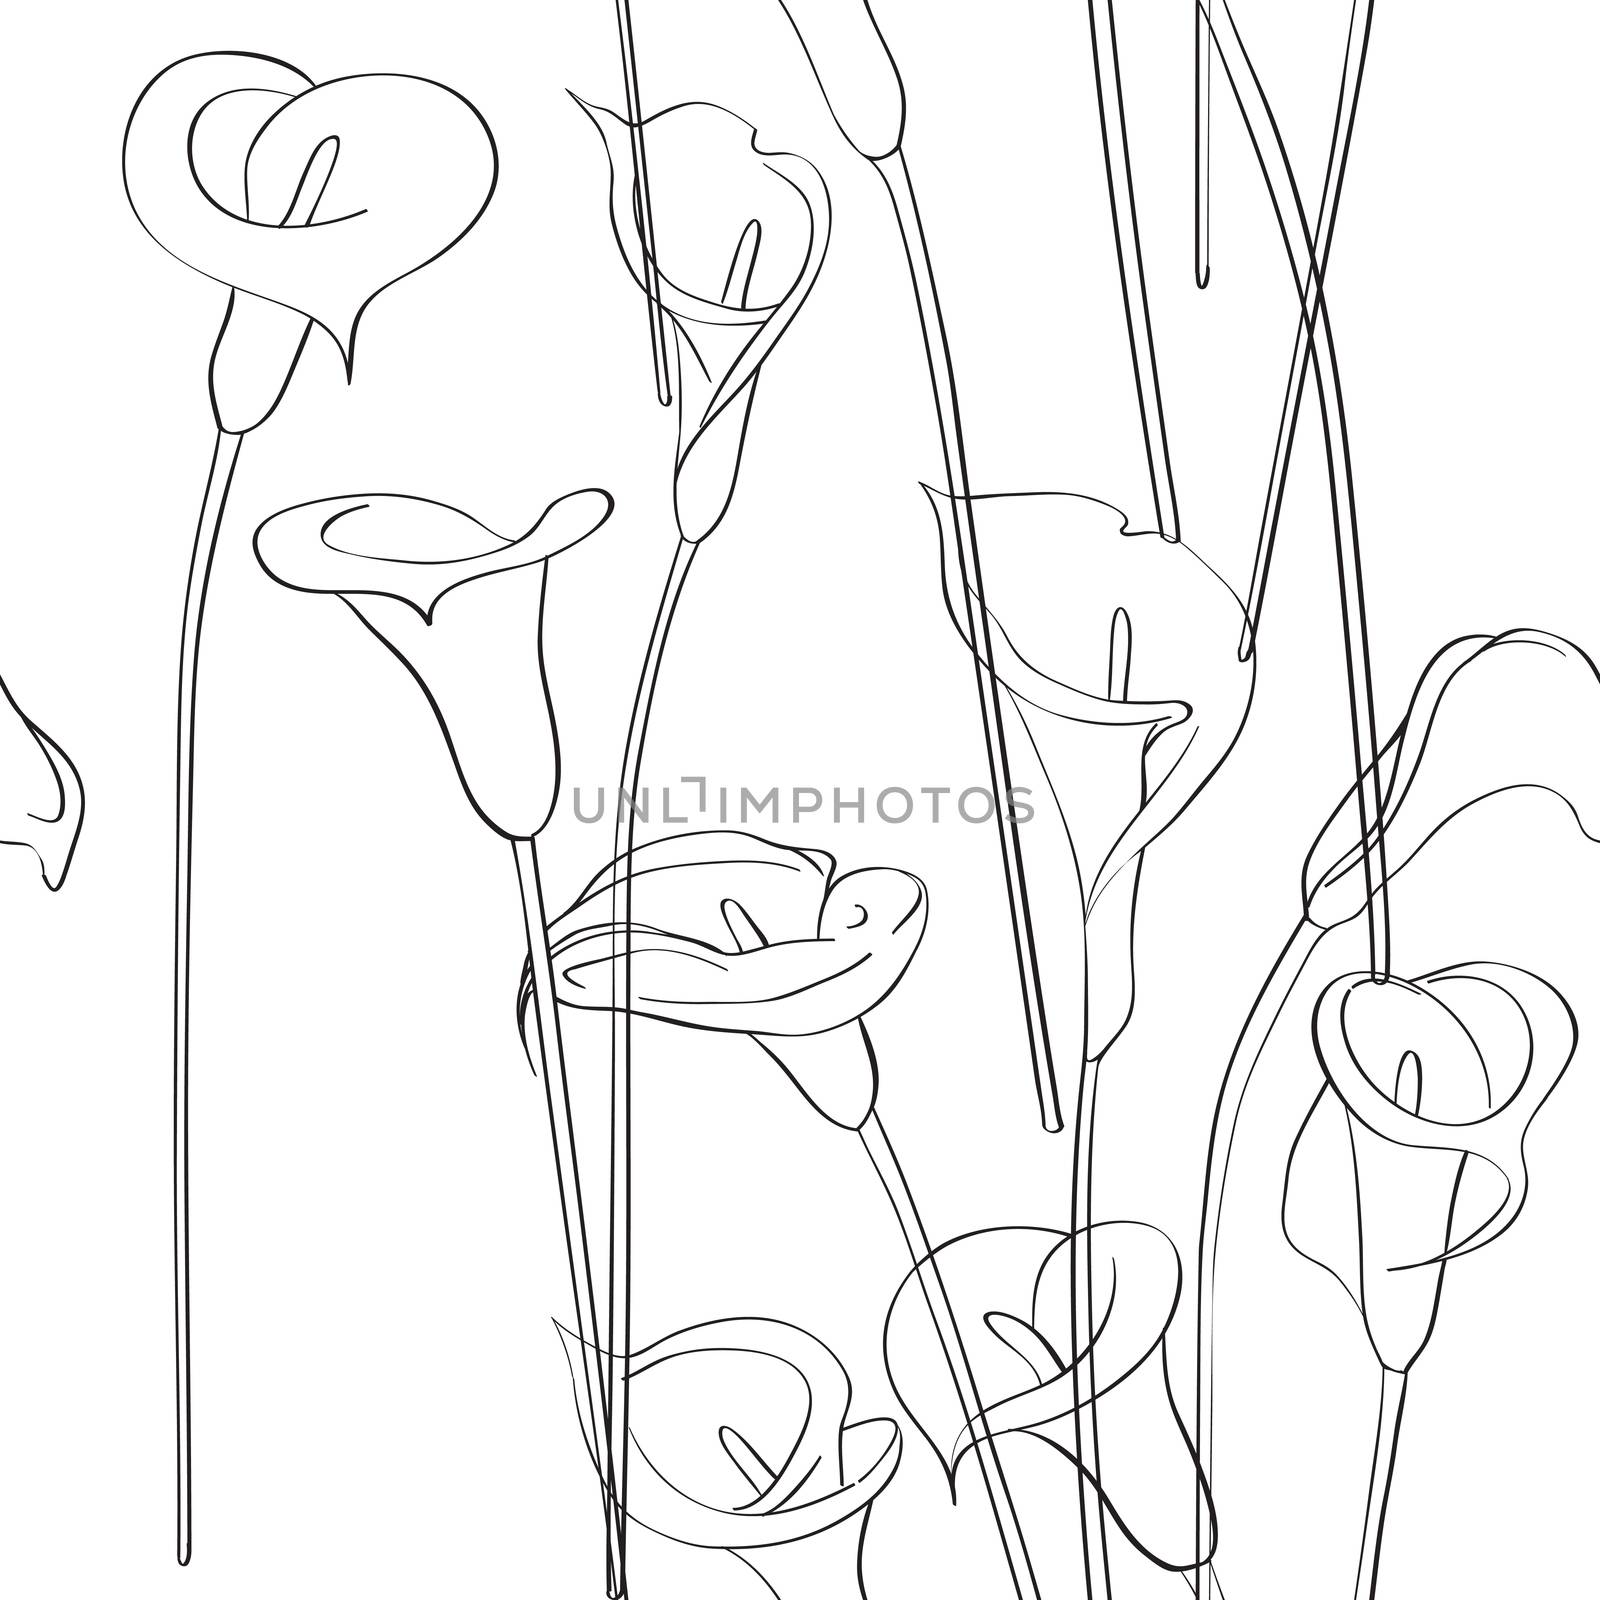 Calla asymmetrical sketch pattern, celebration invitation card on a white background